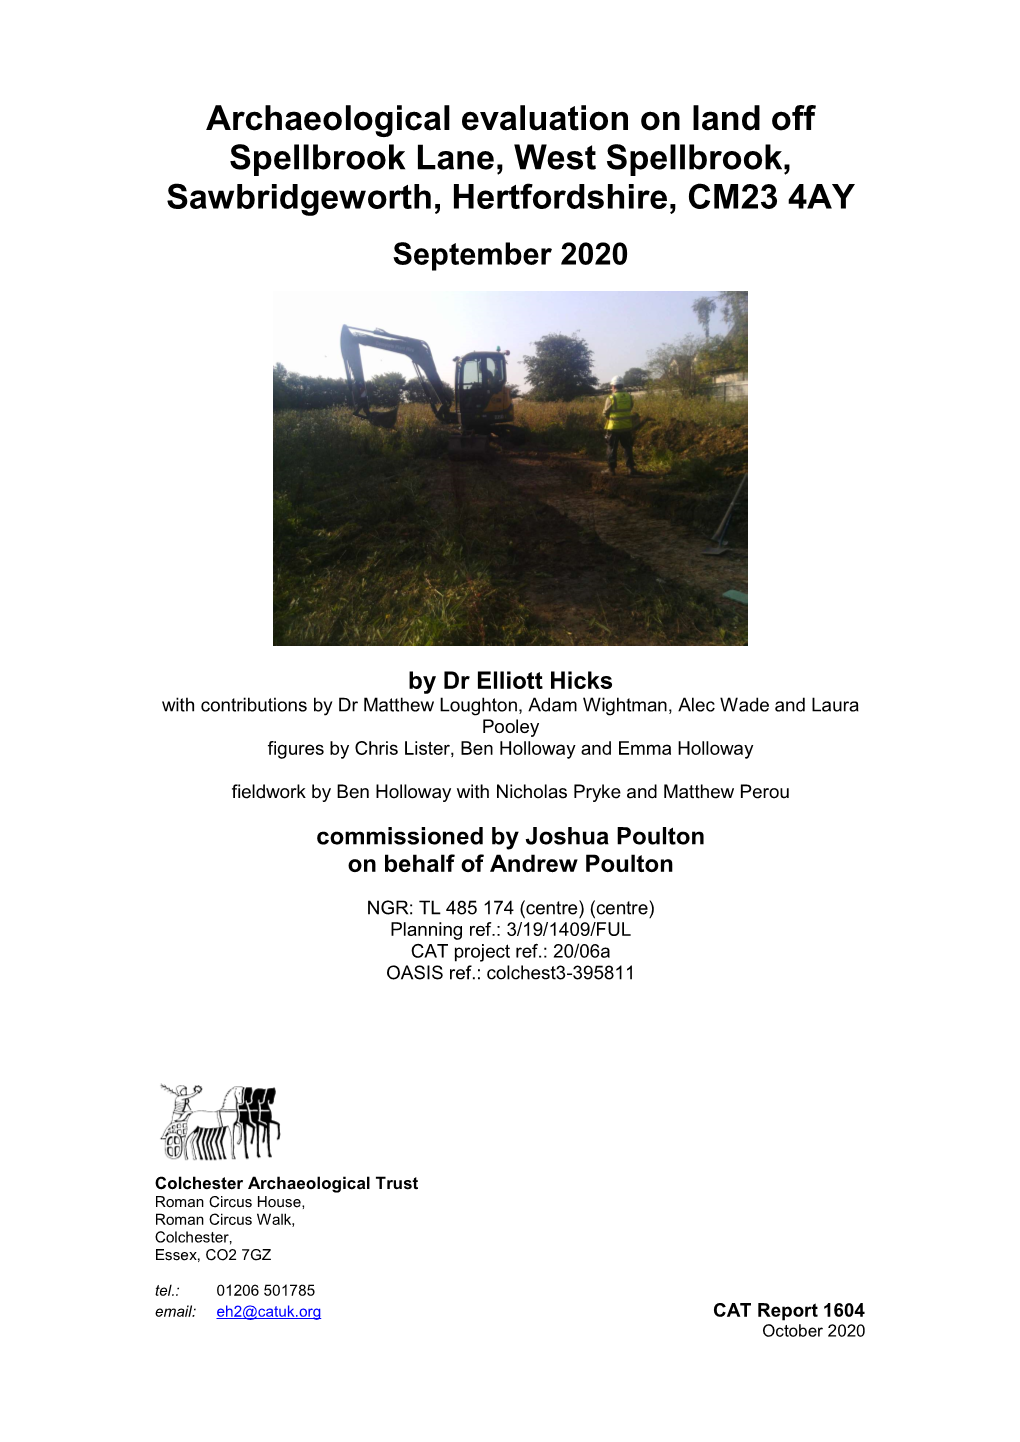 Archaeological Evaluation on Land Off Spellbrook Lane, West Spellbrook, Sawbridgeworth, Hertfordshire, CM23 4AY September 2020